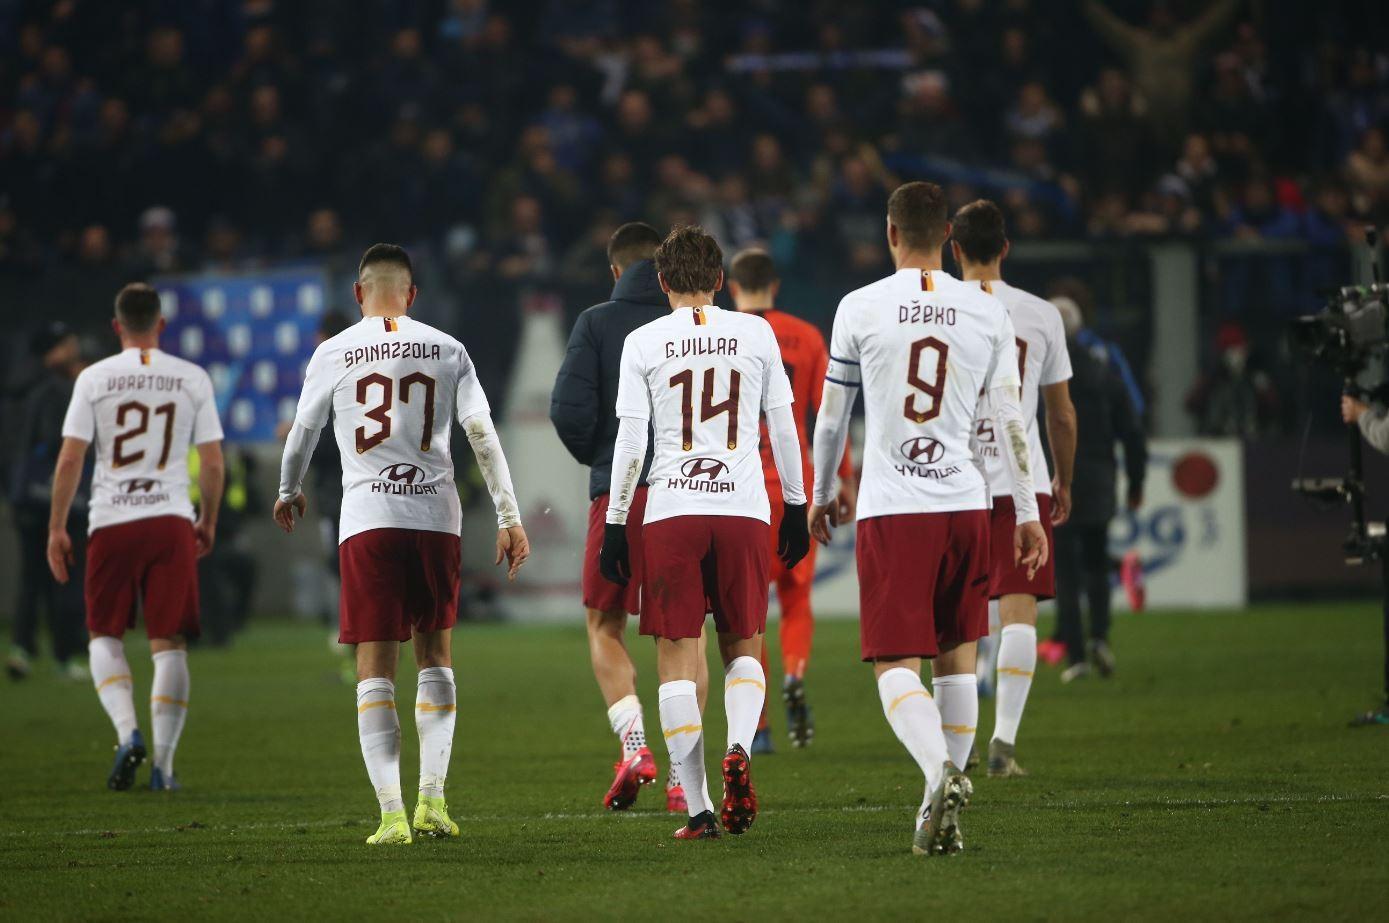 La Roma esce sconfitta dal Gewiss Stadium: finisce 2-1 per l'Atalanta ©Mancini